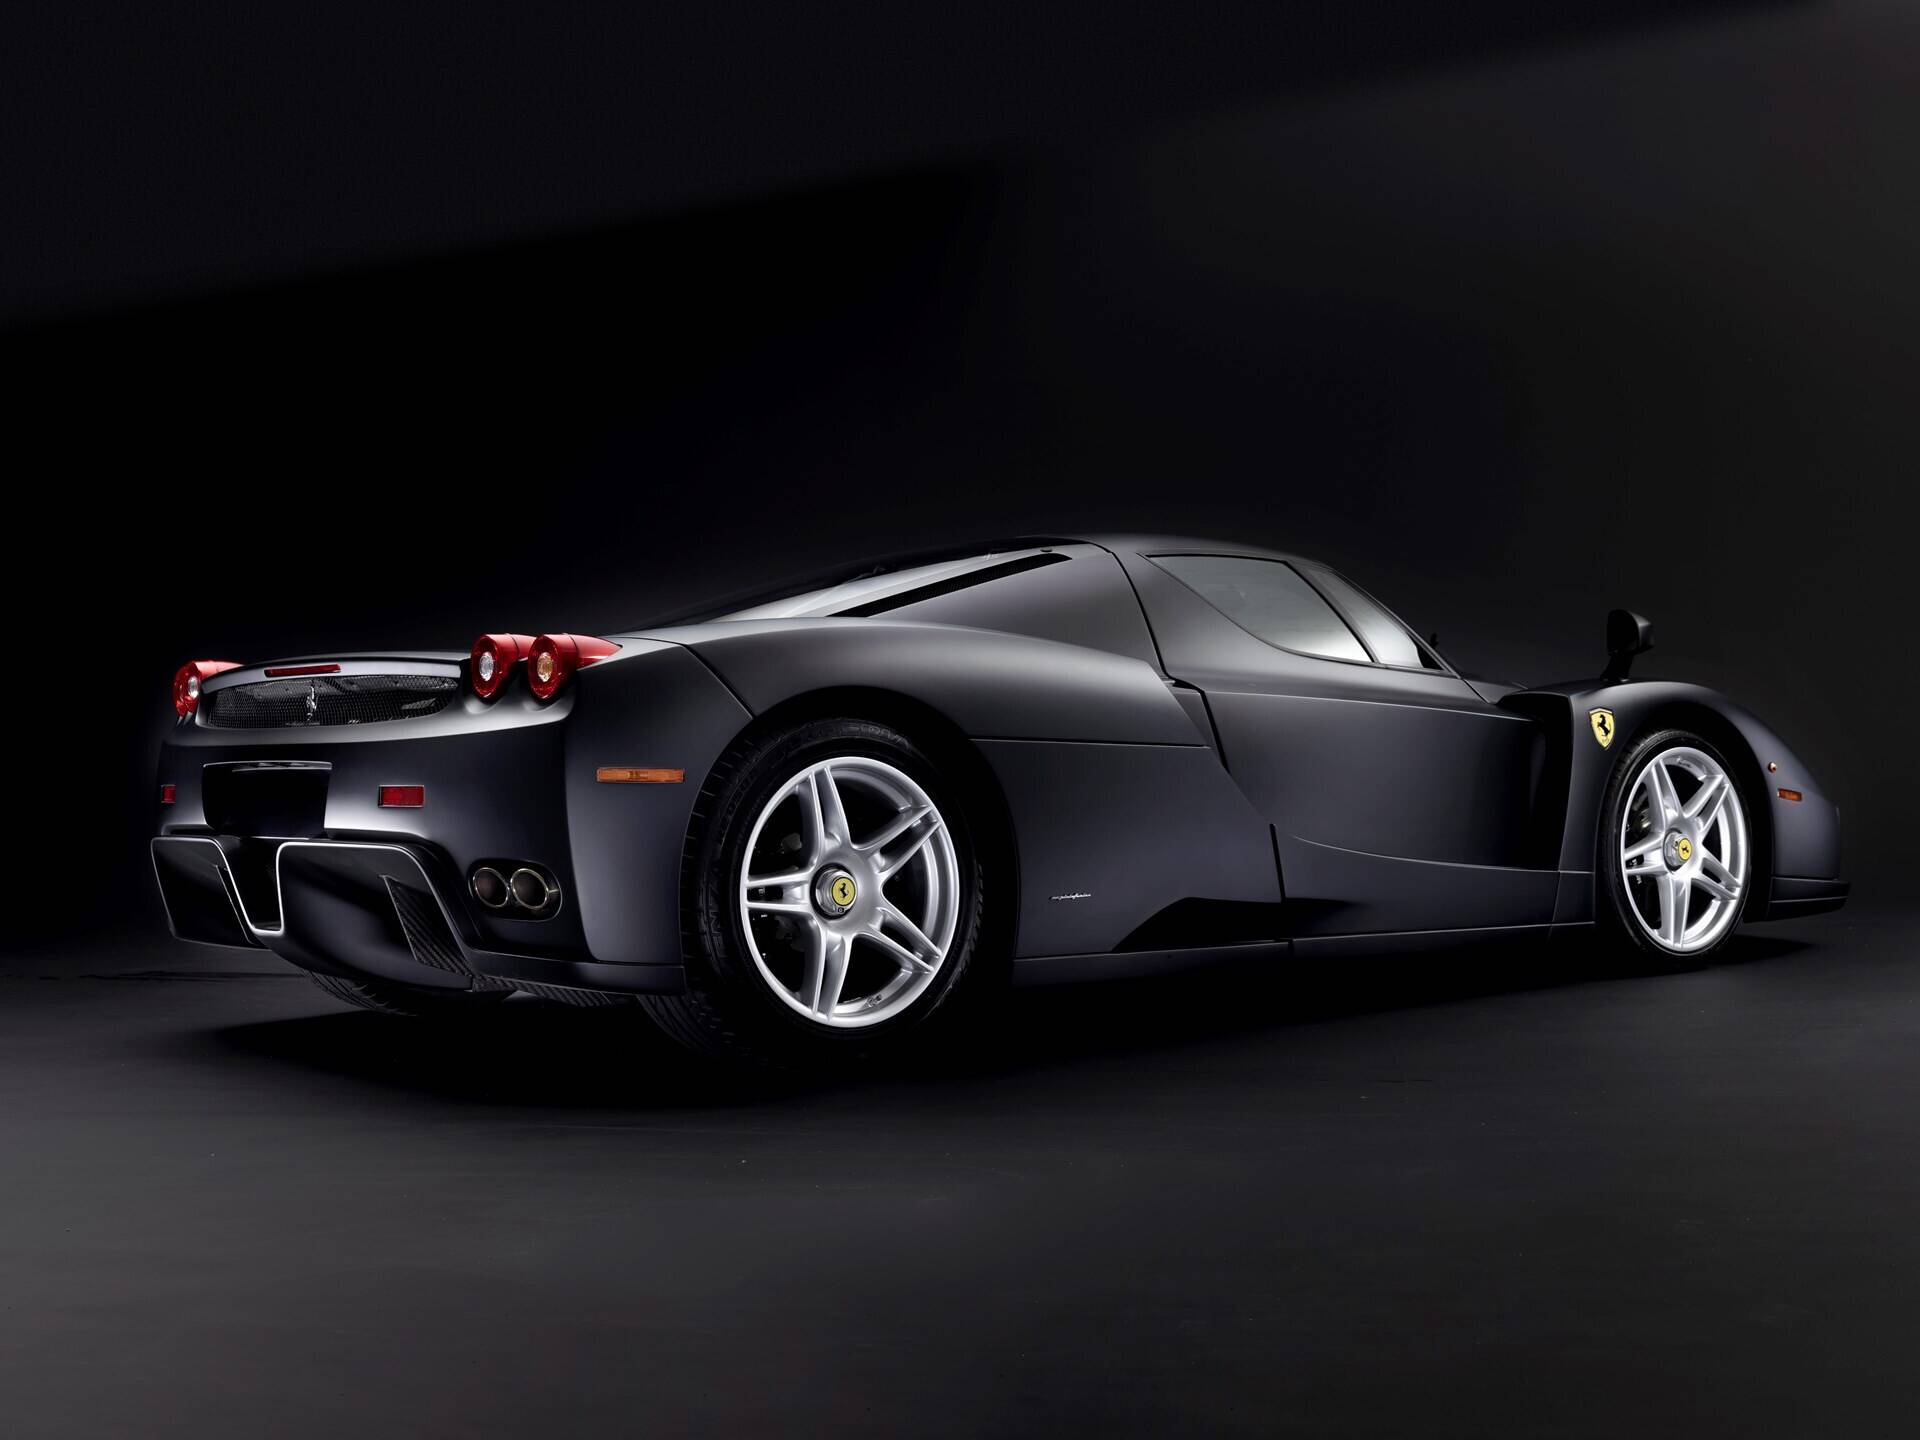 imagen 13 de Sale a subasta un Ferrari Enzo negro mate único excepcional.